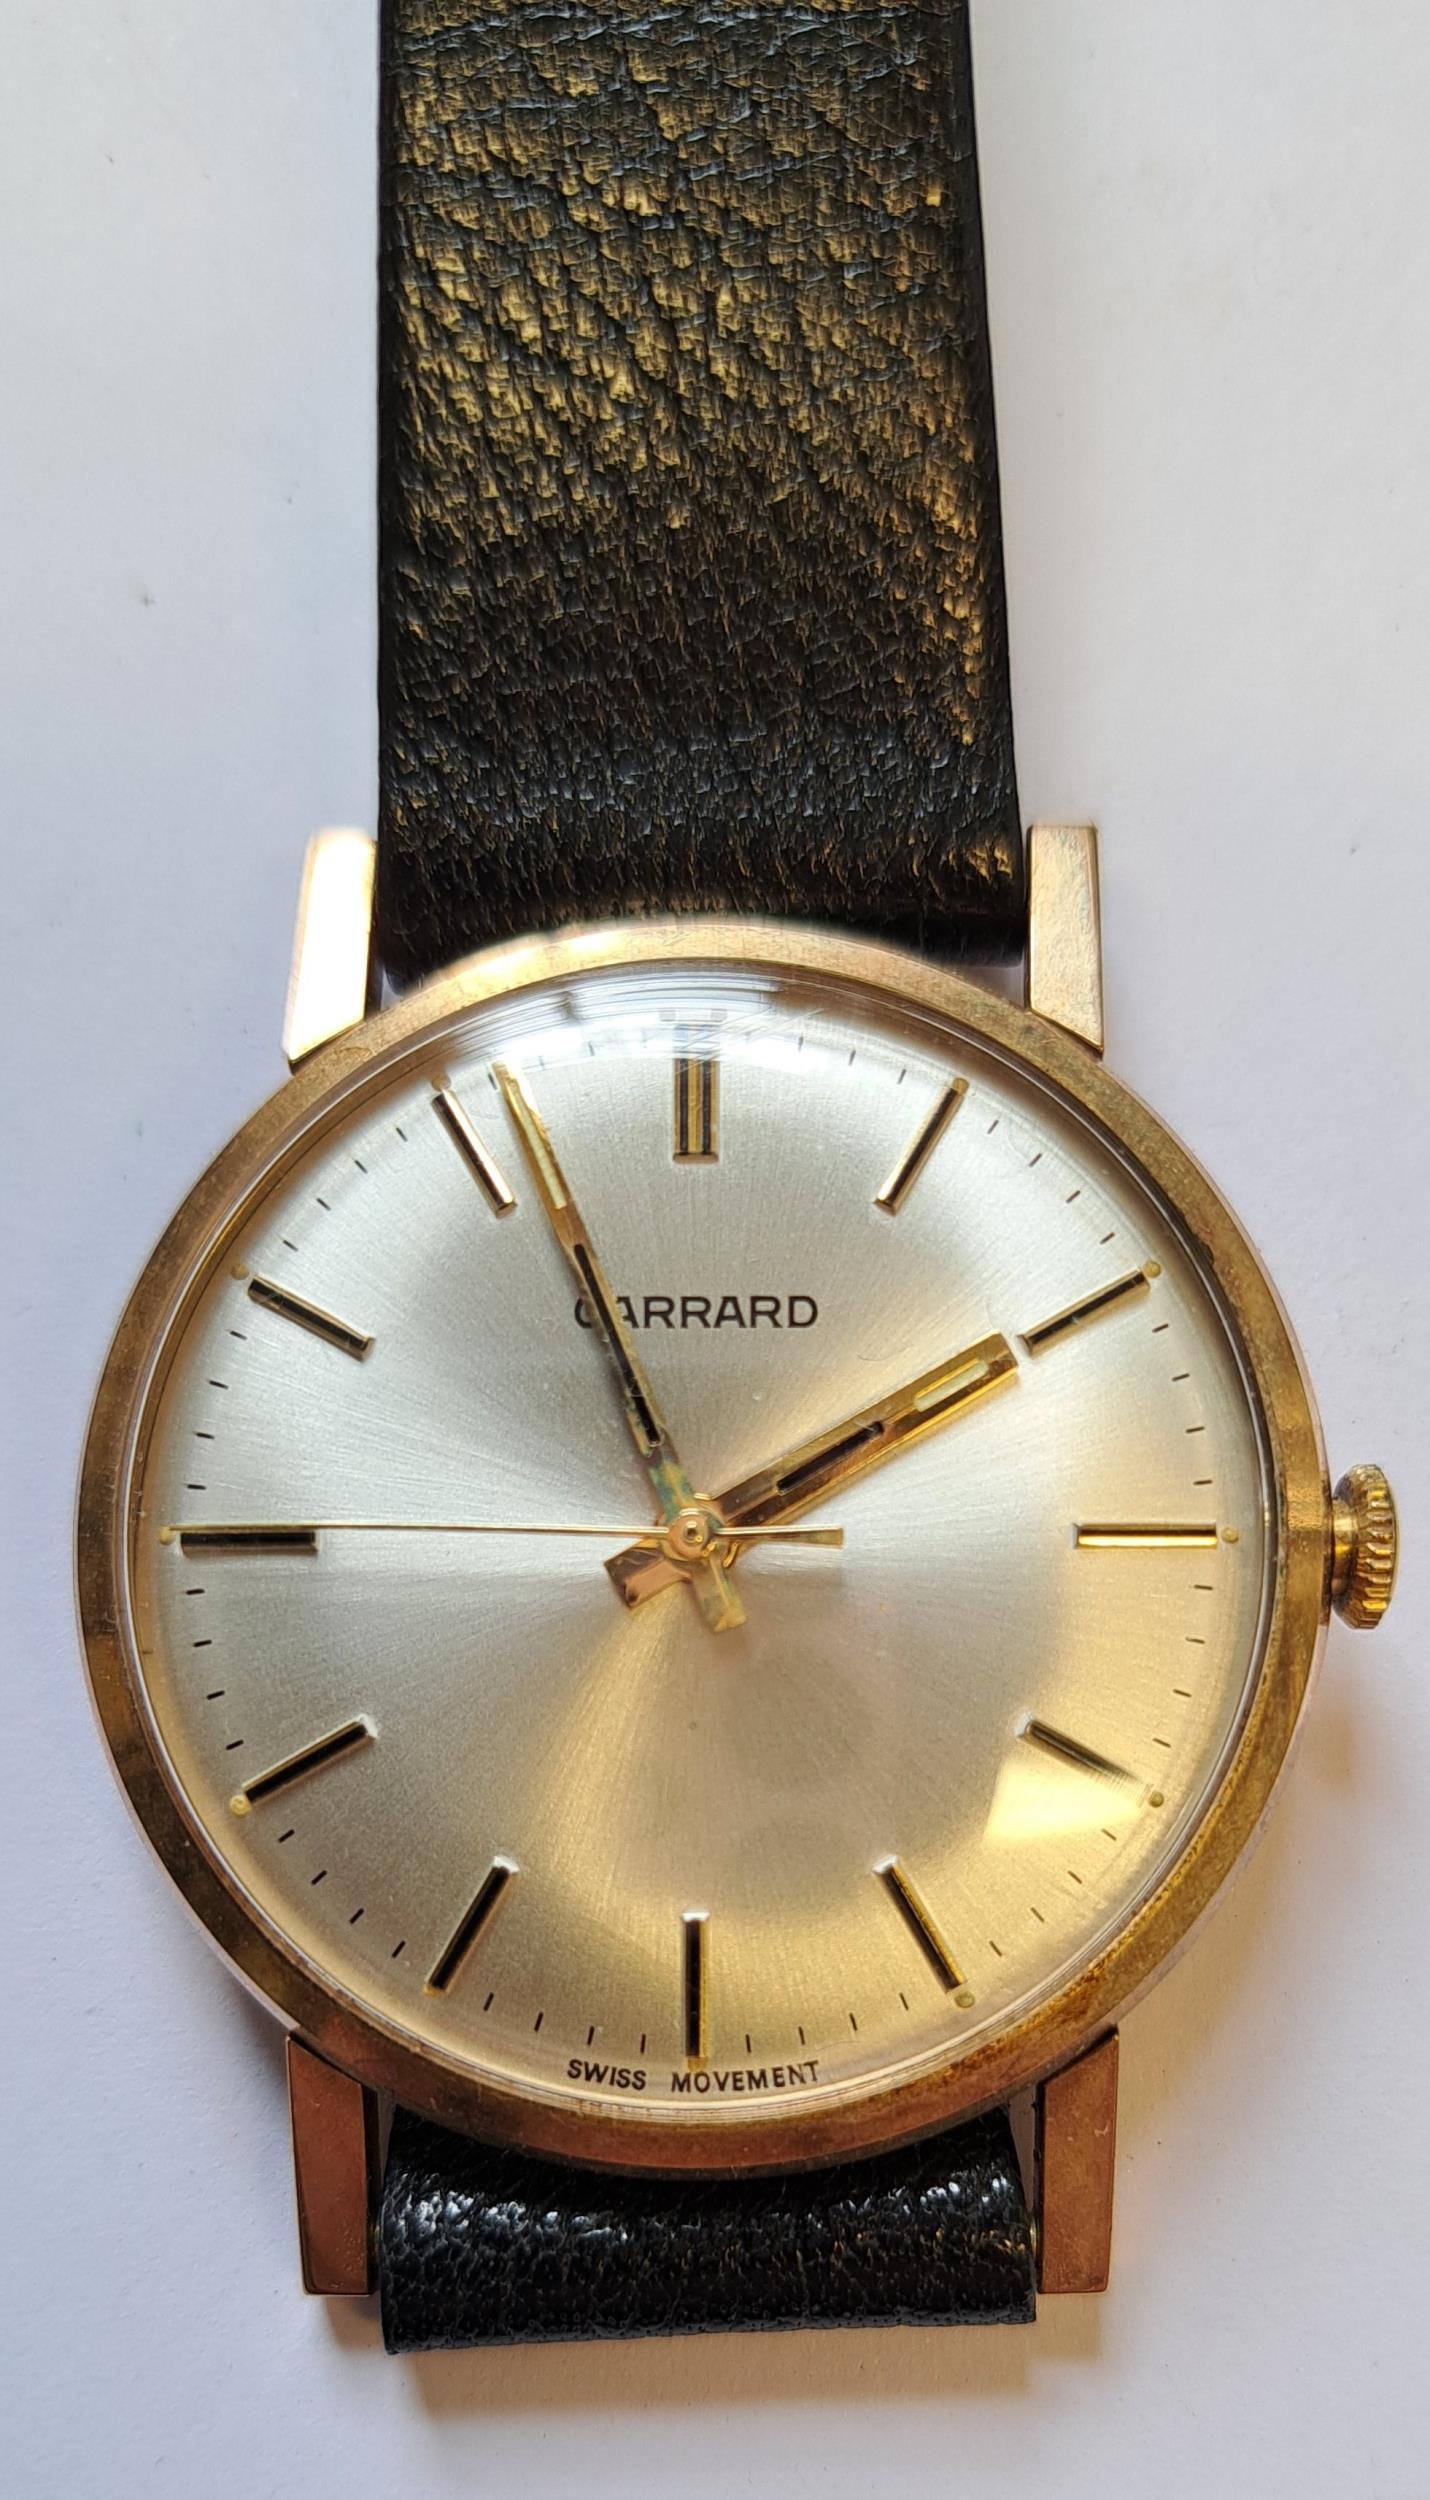 Garrard, gentleman's circular gold cased wristwatch with black leather strap, in original box - Image 2 of 3